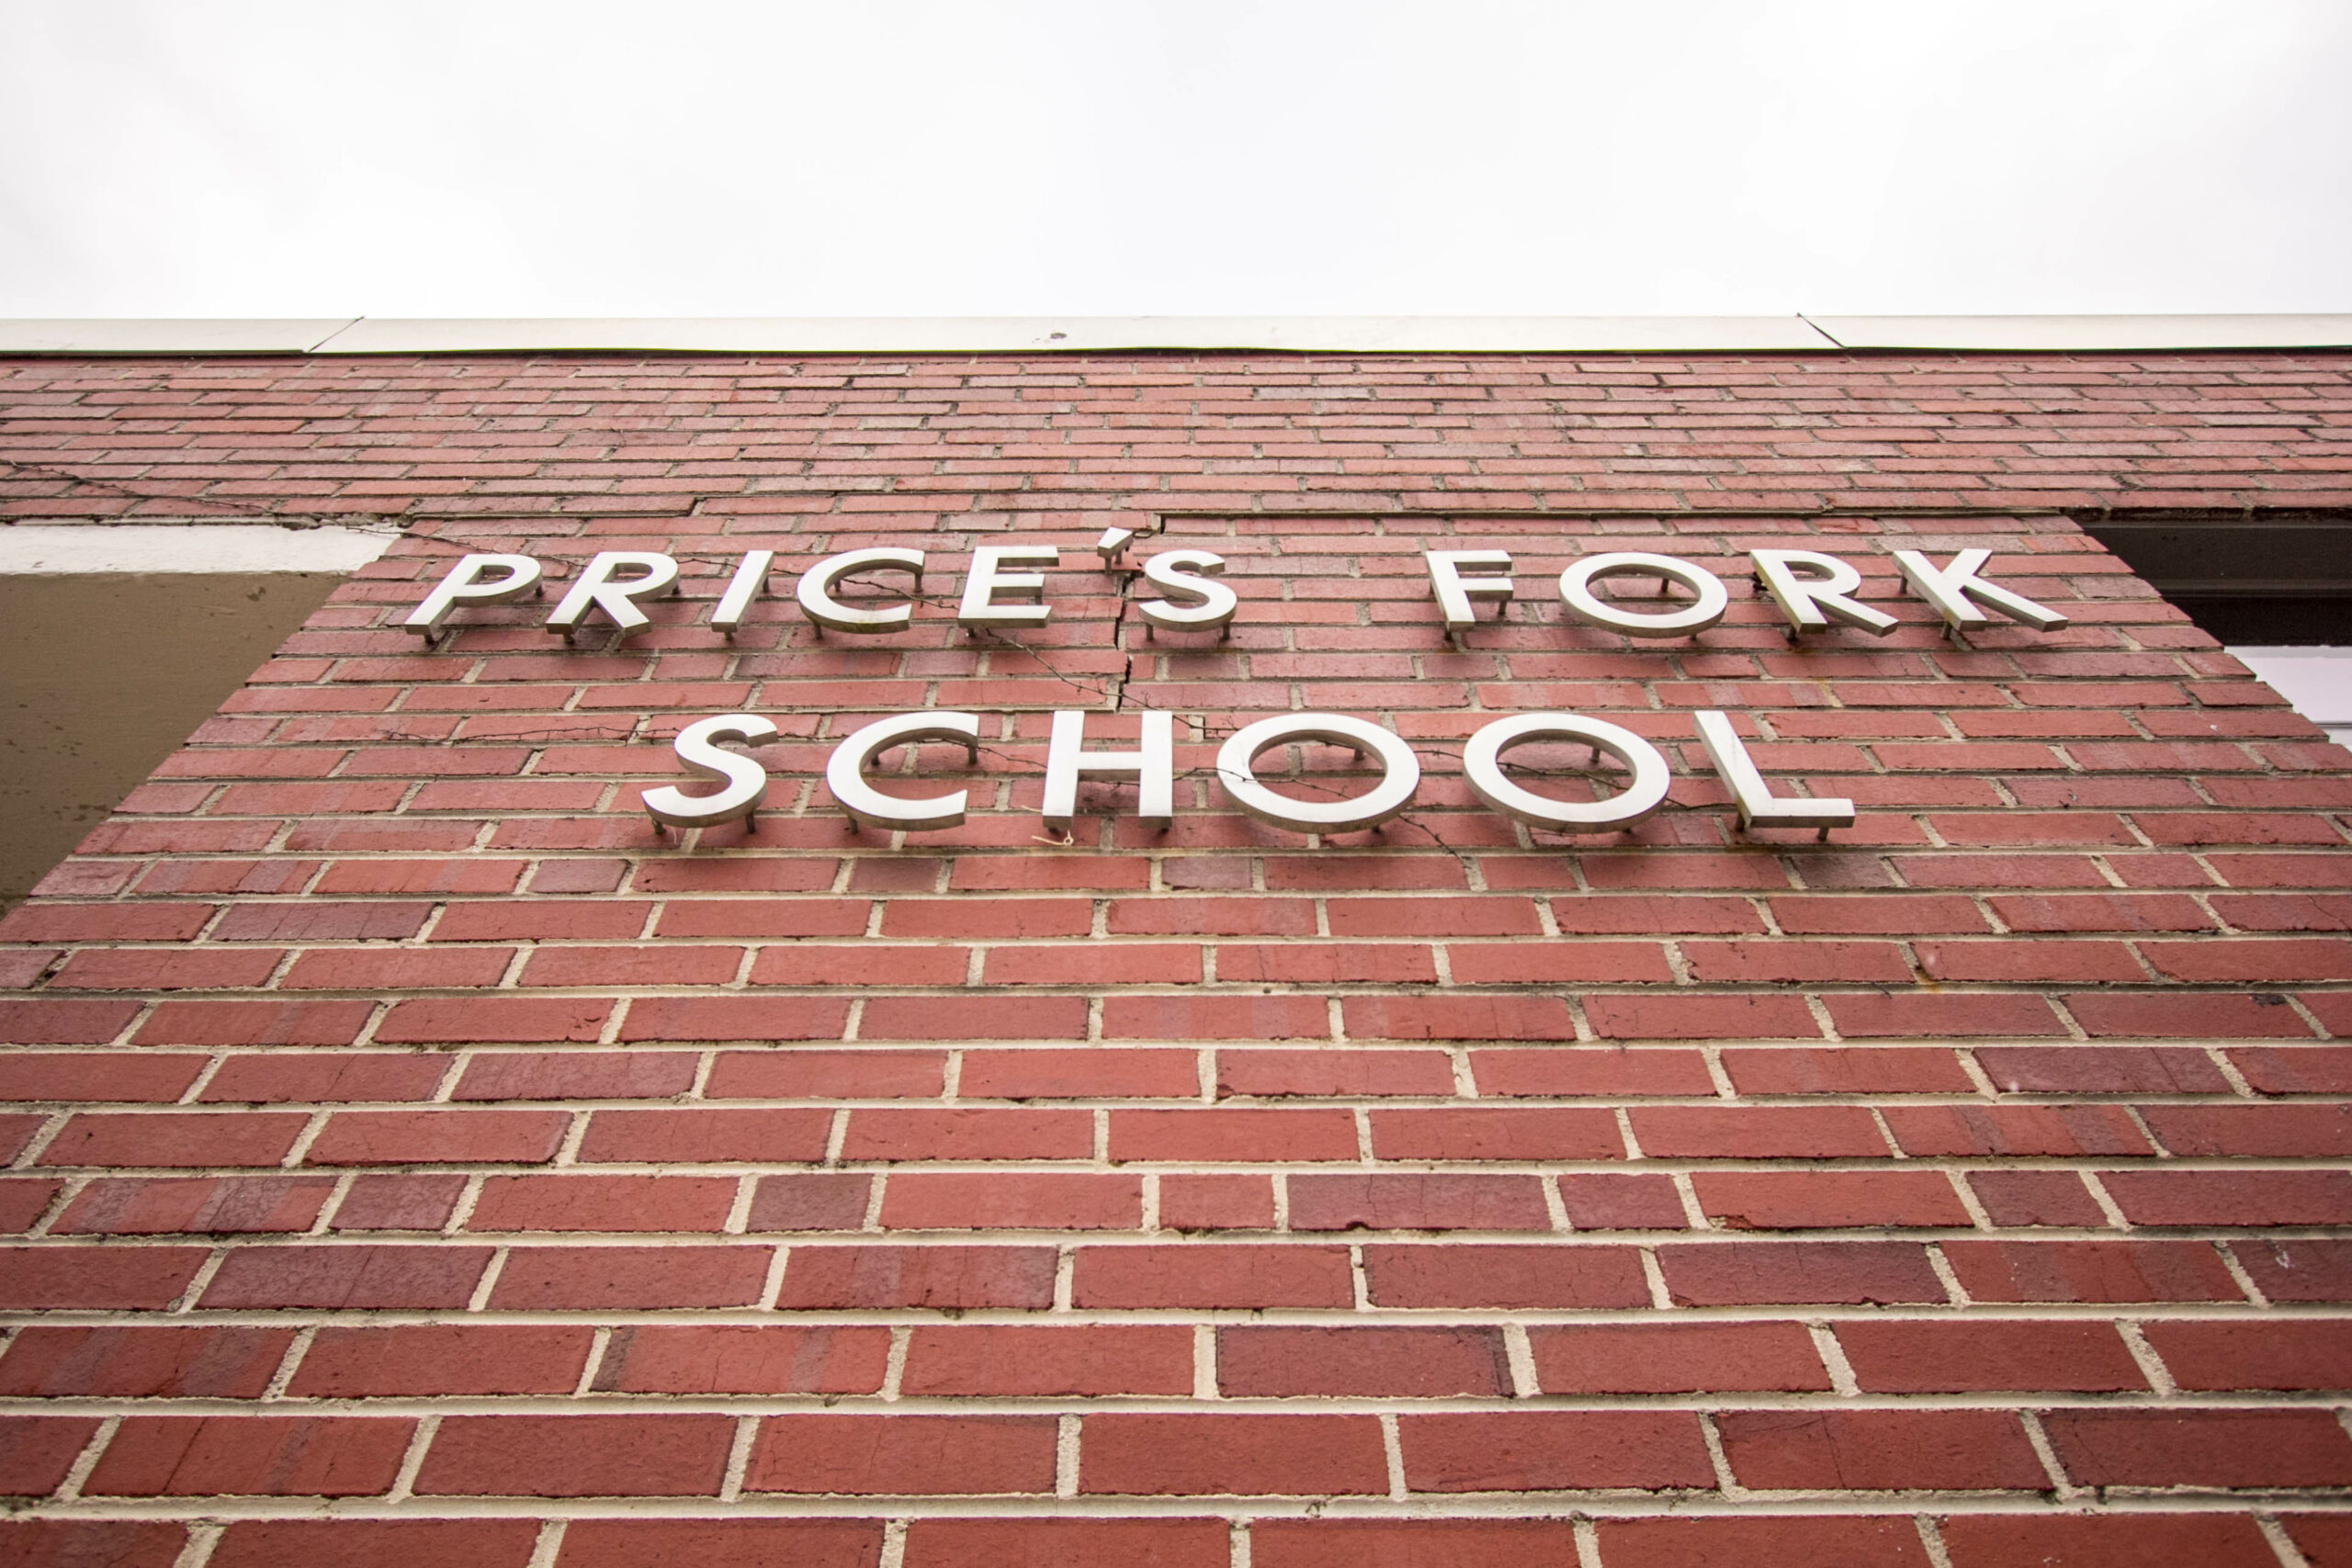 Price's Fork School sign